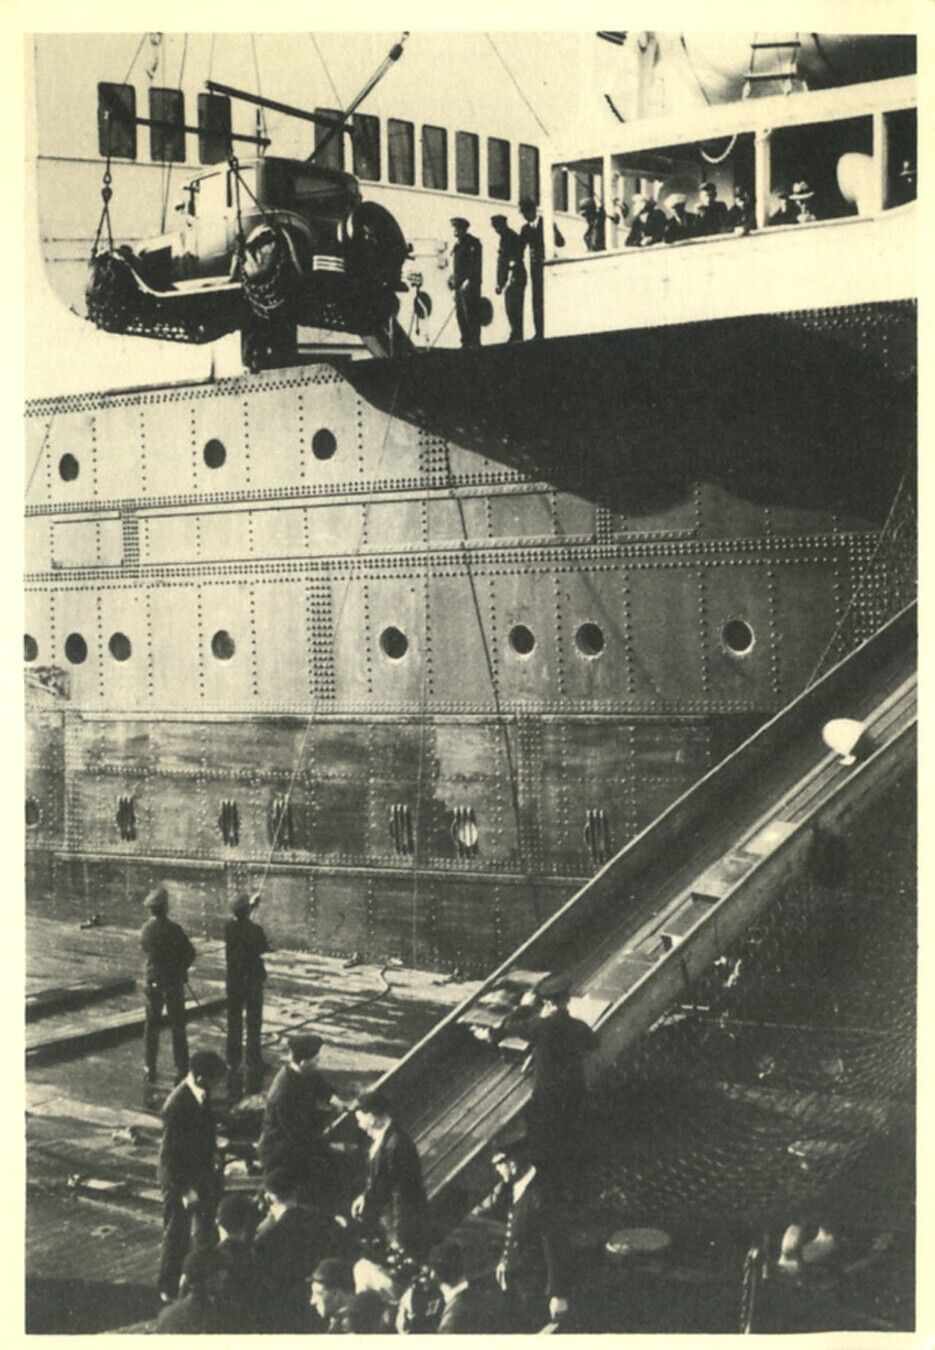 Landing Motorcar Shipping in the Mersey 1930s Liverpool England Reprint Postcard